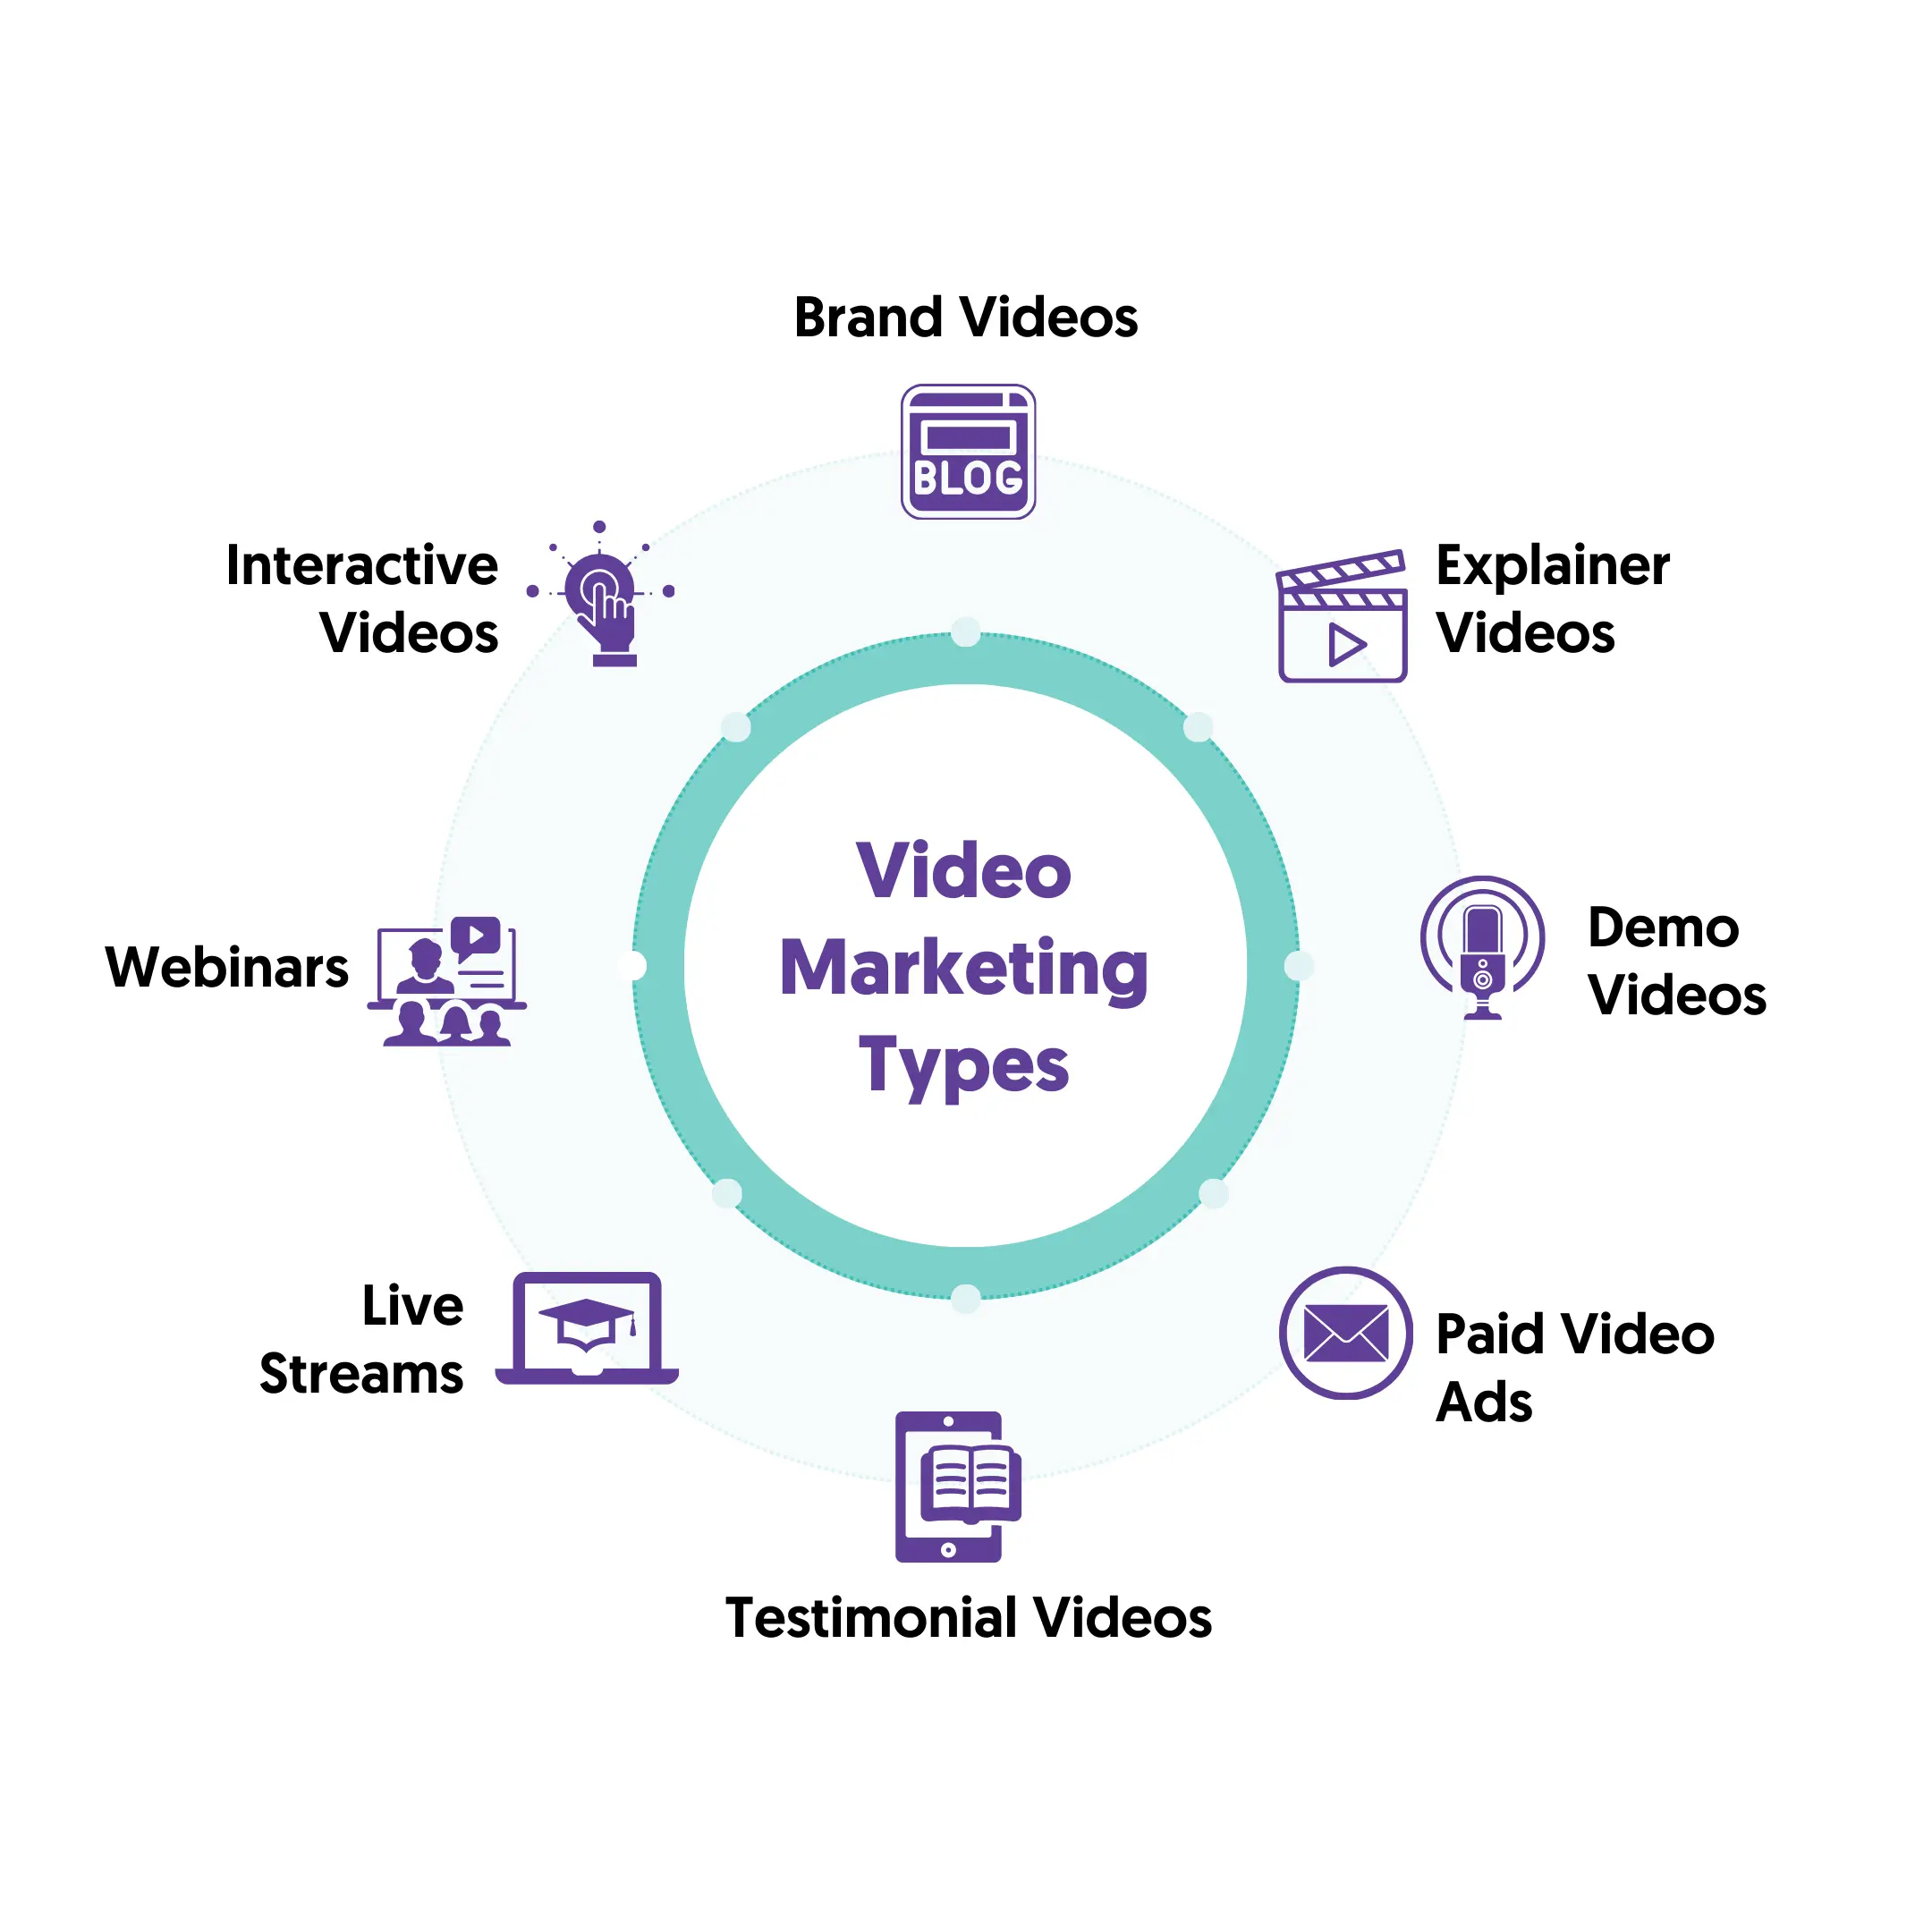 Video Marketing Types